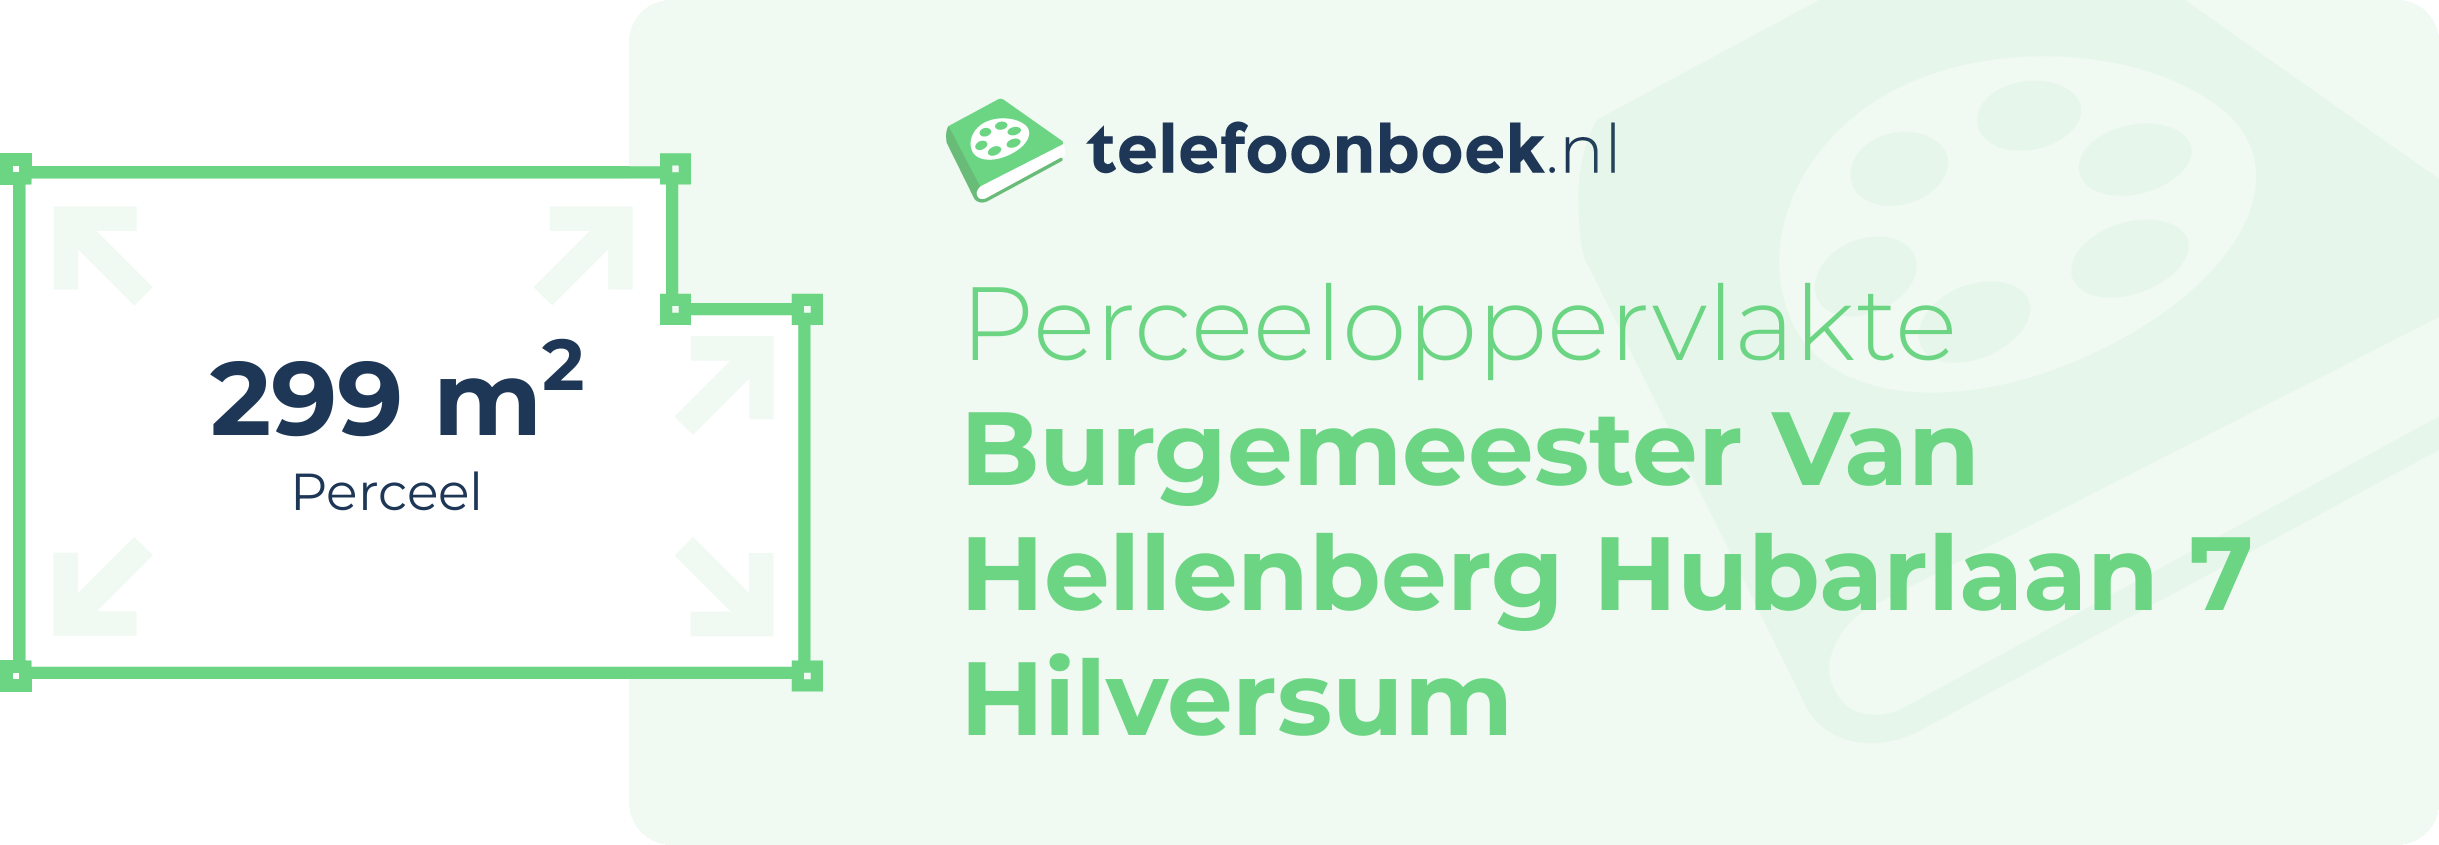 Perceeloppervlakte Burgemeester Van Hellenberg Hubarlaan 7 Hilversum